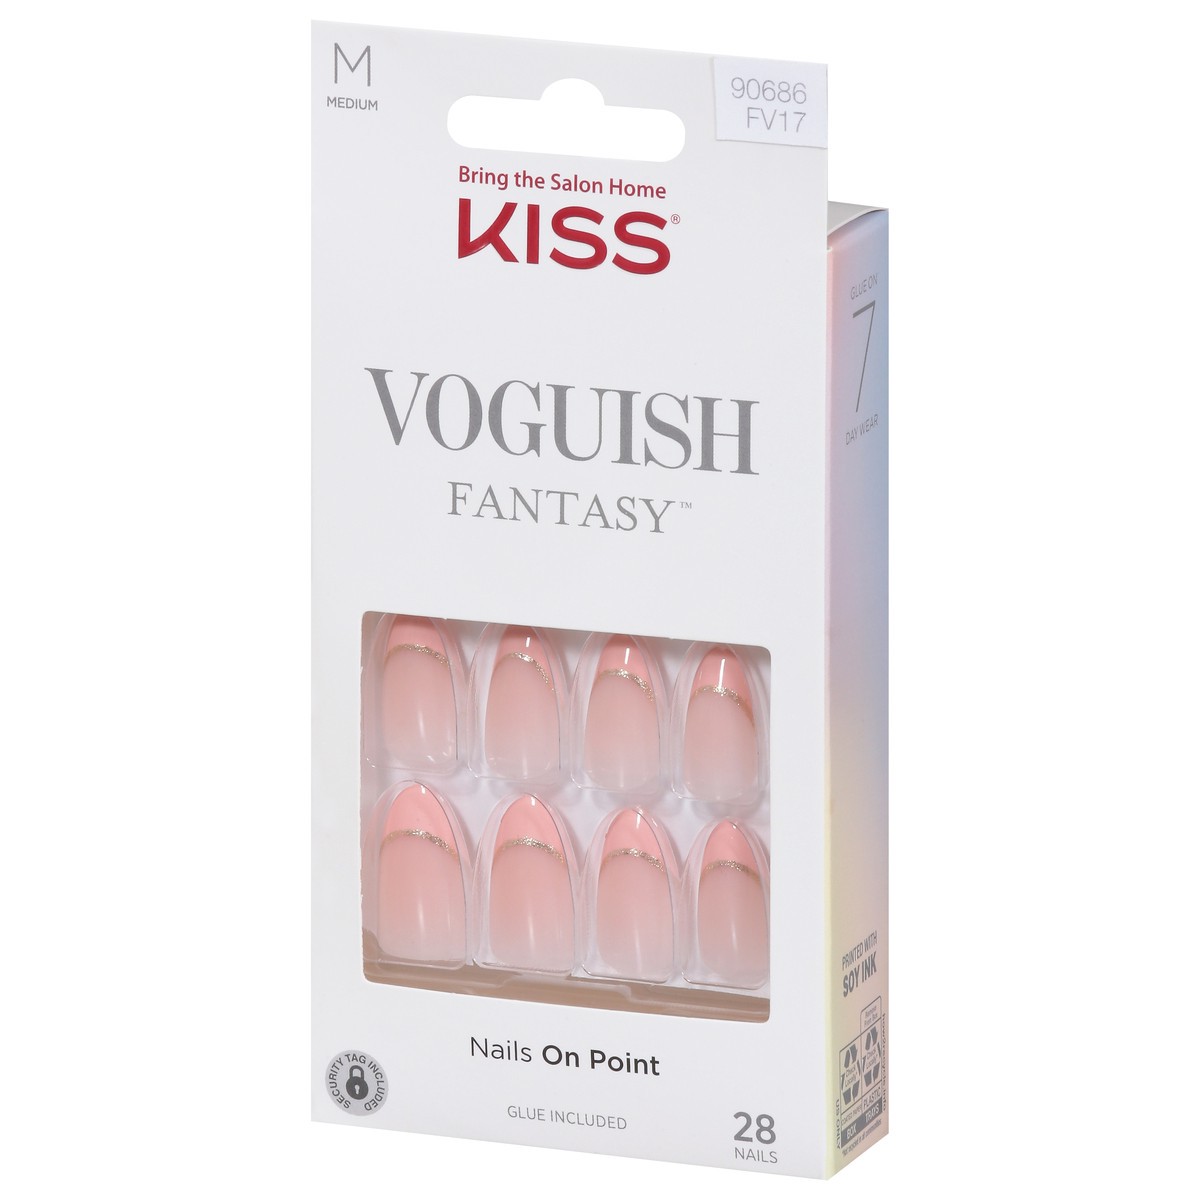 Kiss Voguish Fantasy Nails On Point Medium 28 ea 28 ct | Shipt